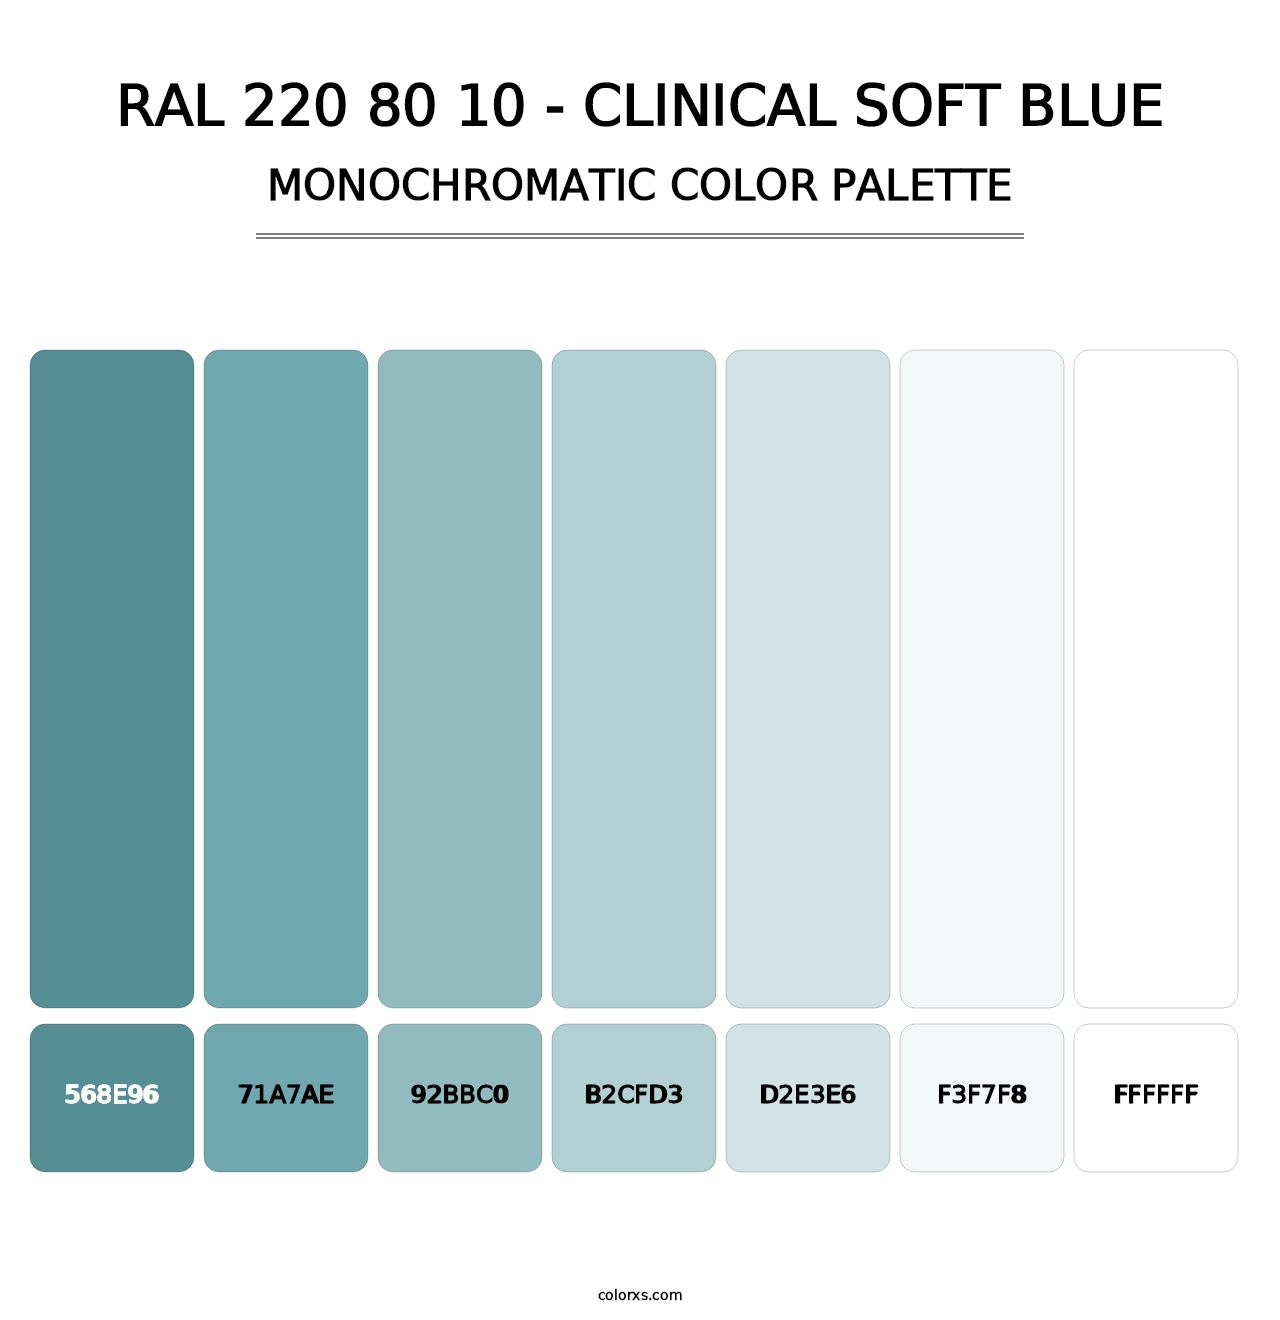 RAL 220 80 10 - Clinical Soft Blue - Monochromatic Color Palette